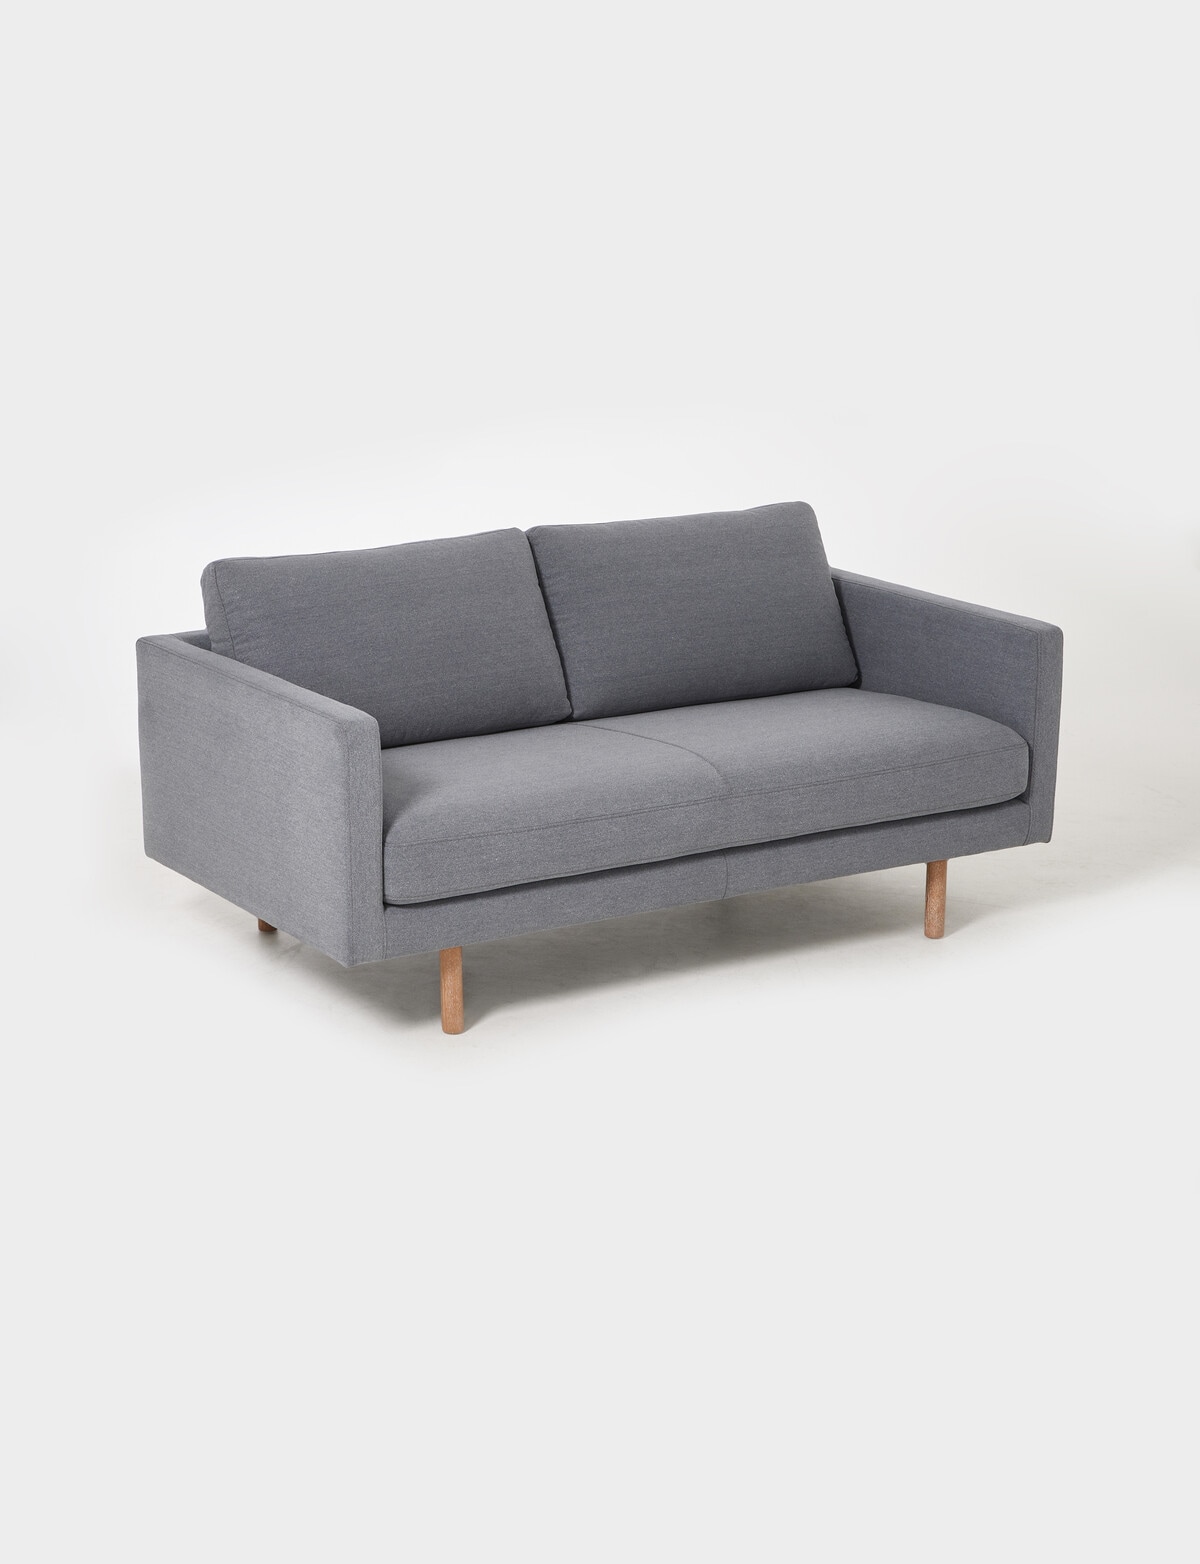 Marcello Co Sydney Fabric 2 Seater Sofa